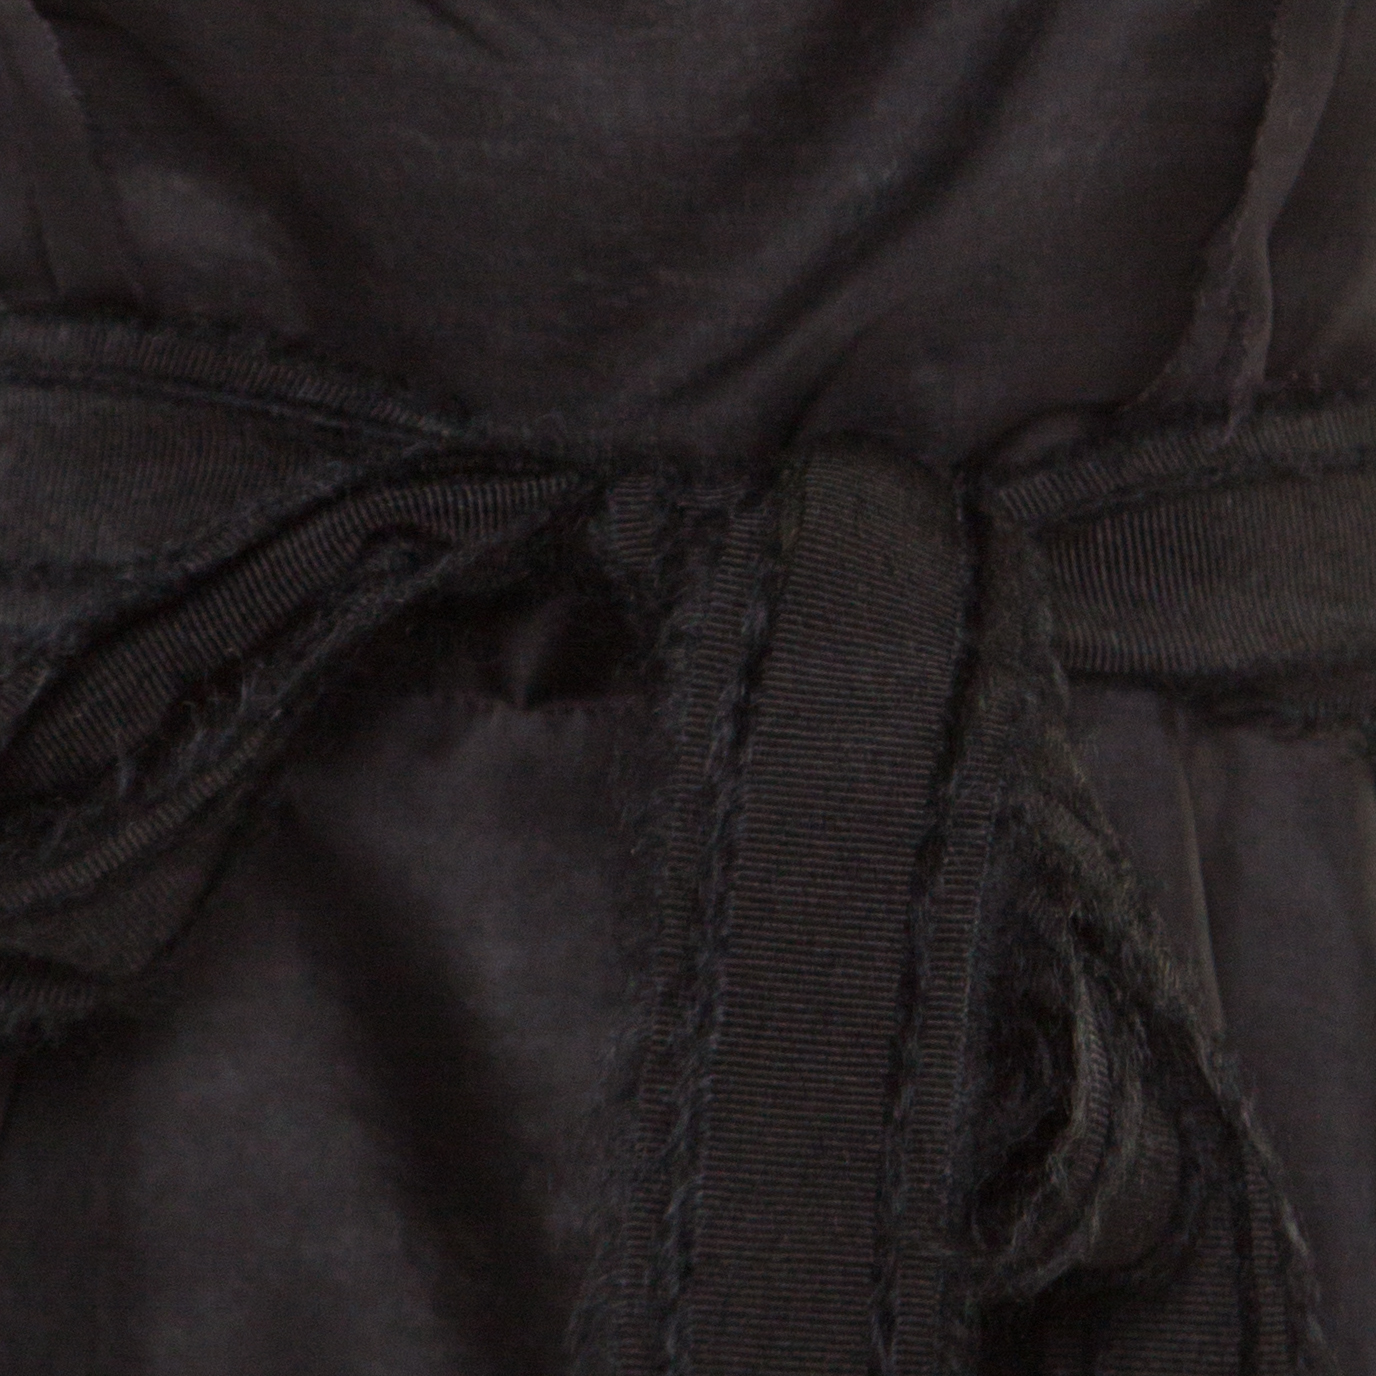 Lanvin Black Silk Organza Raw Edge Detail Sheer Yoke Layered Dress S